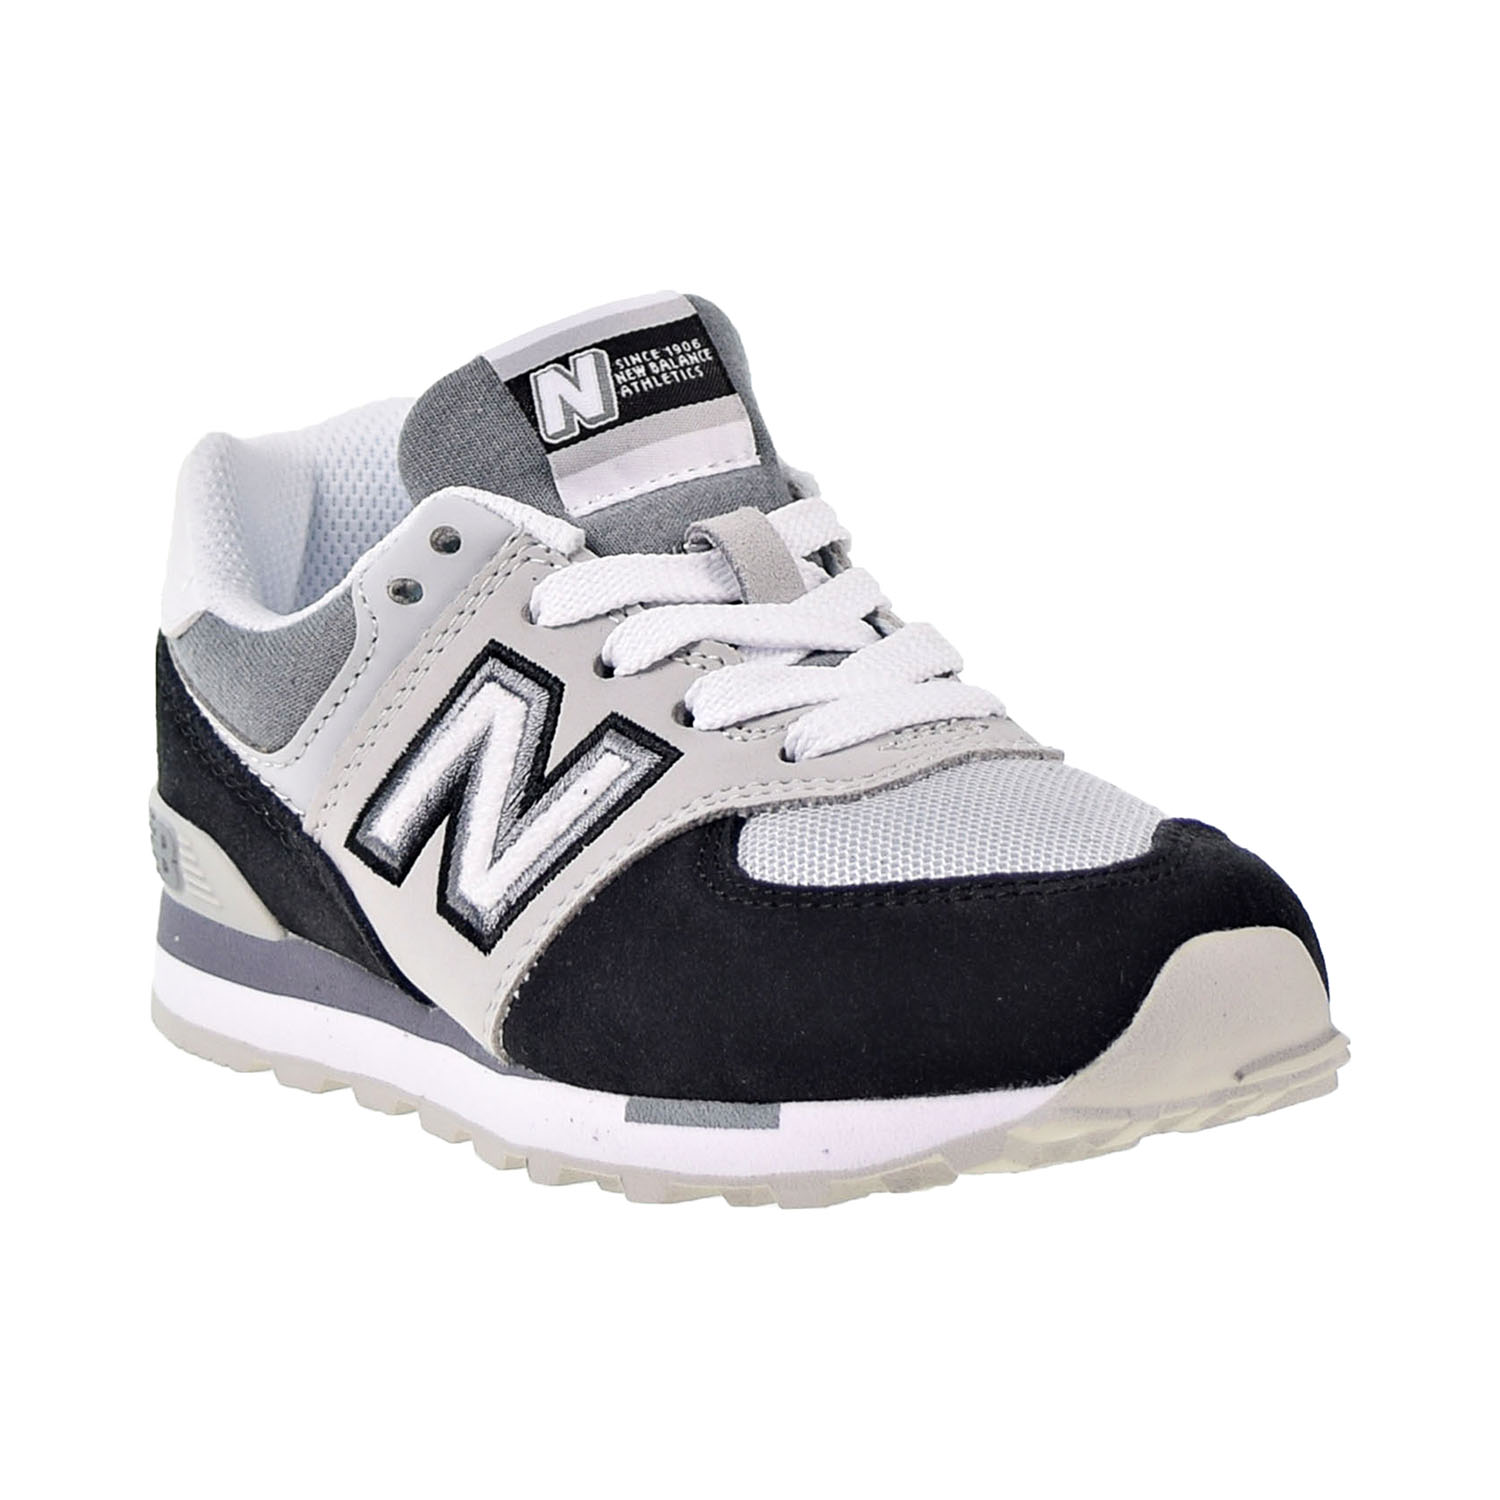 New Balance 574 Varsity Sport Little Kids Shoes Gray-Black-White pc574-nlc - image 2 of 6